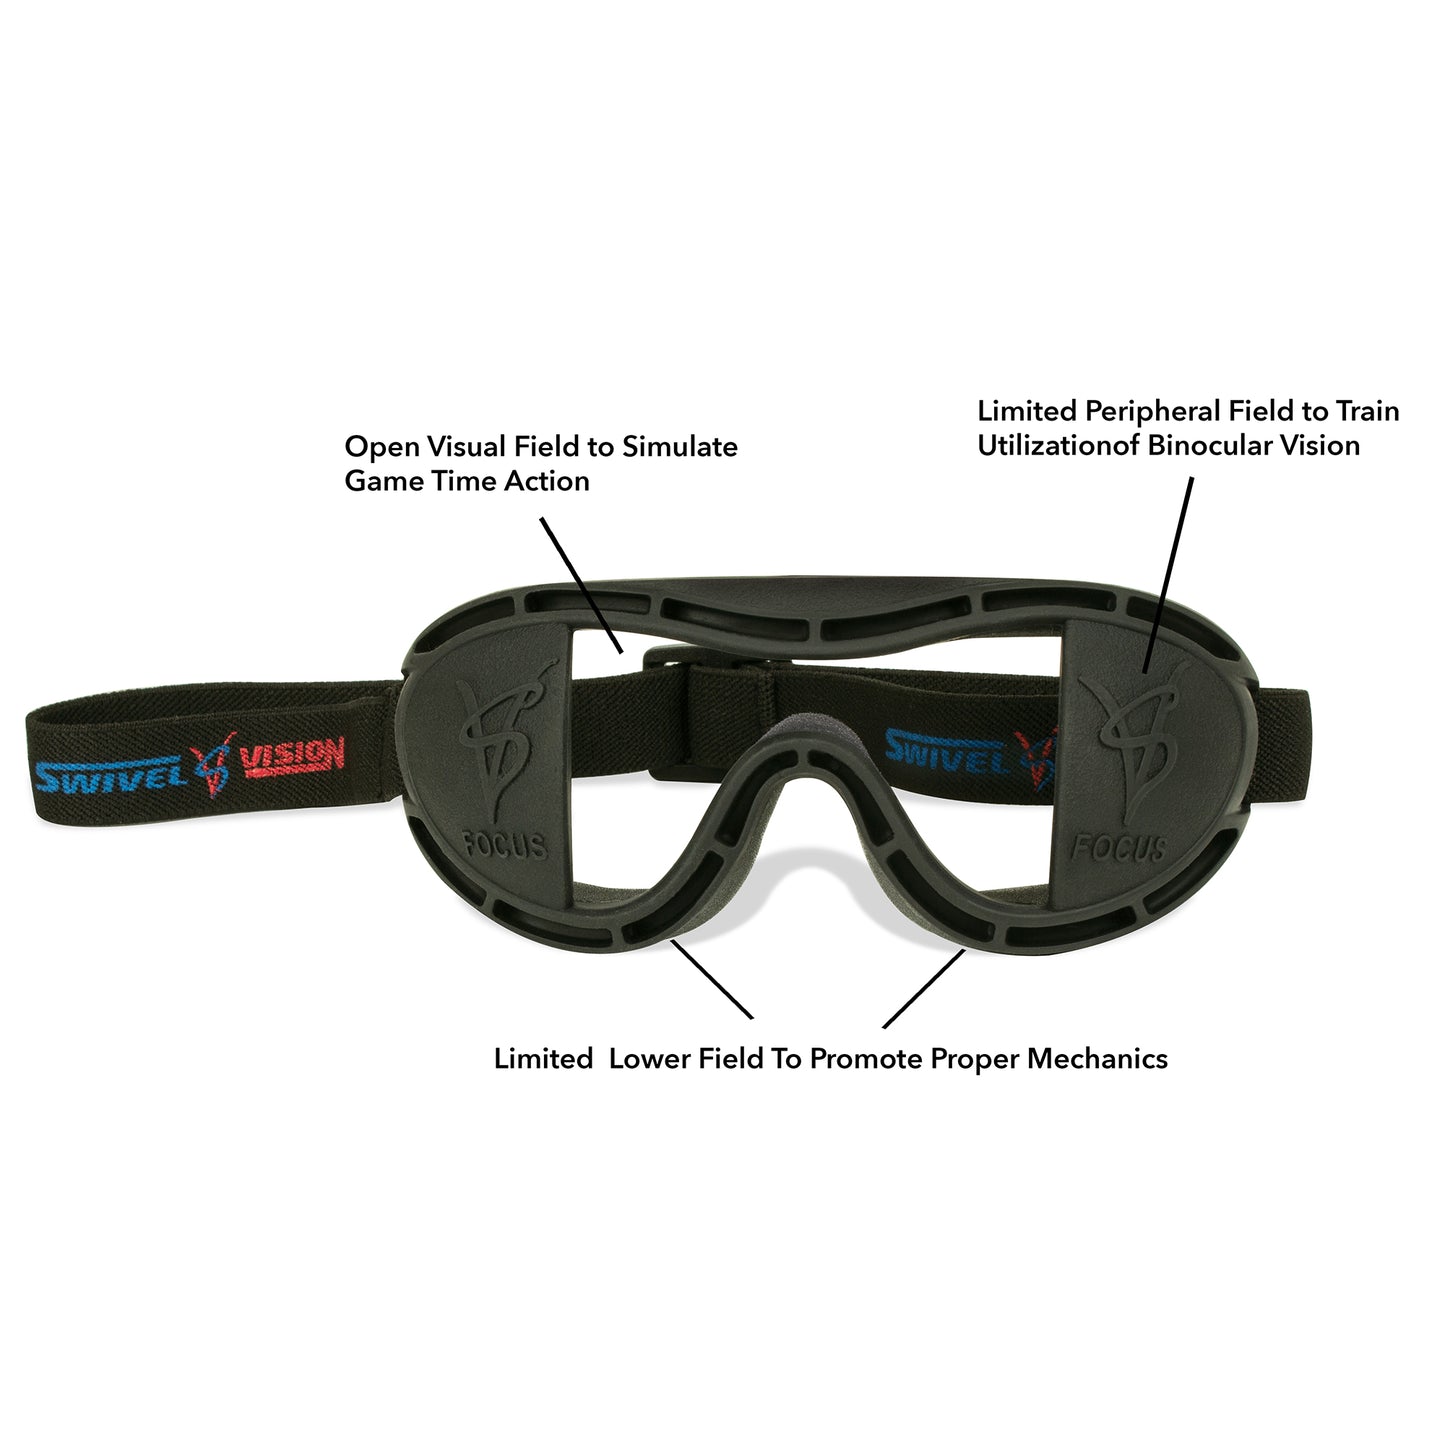 Swivel Sports Vision Training Goggles